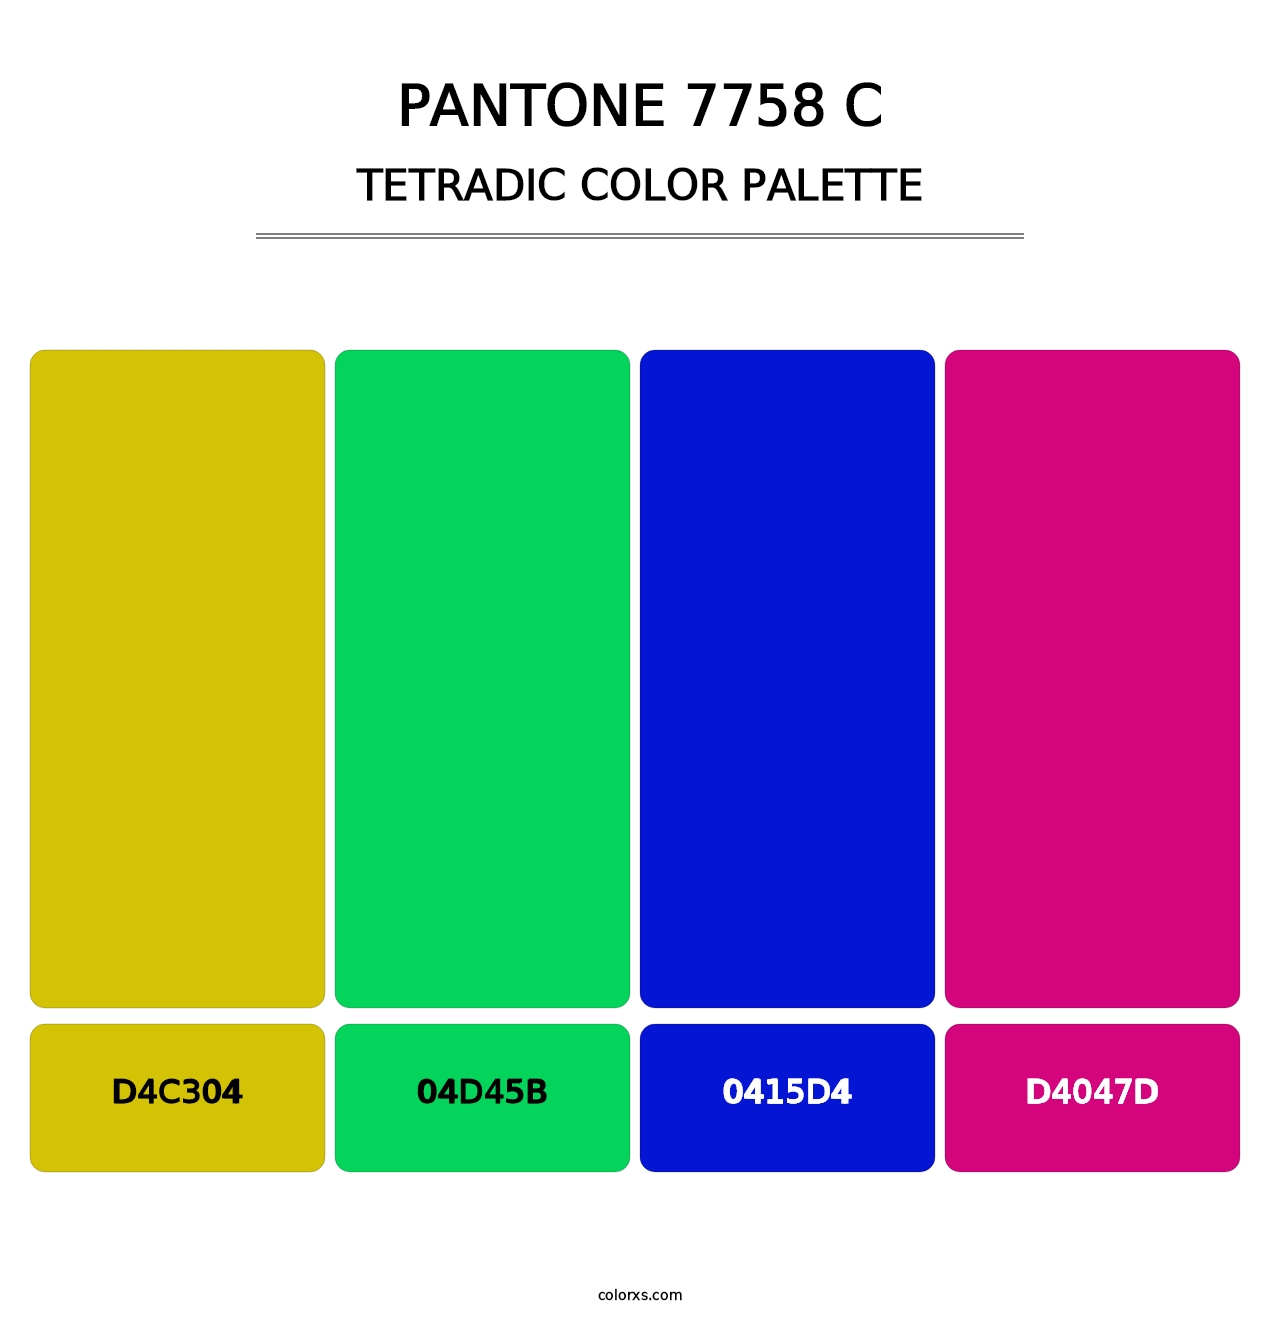 PANTONE 7758 C - Tetradic Color Palette